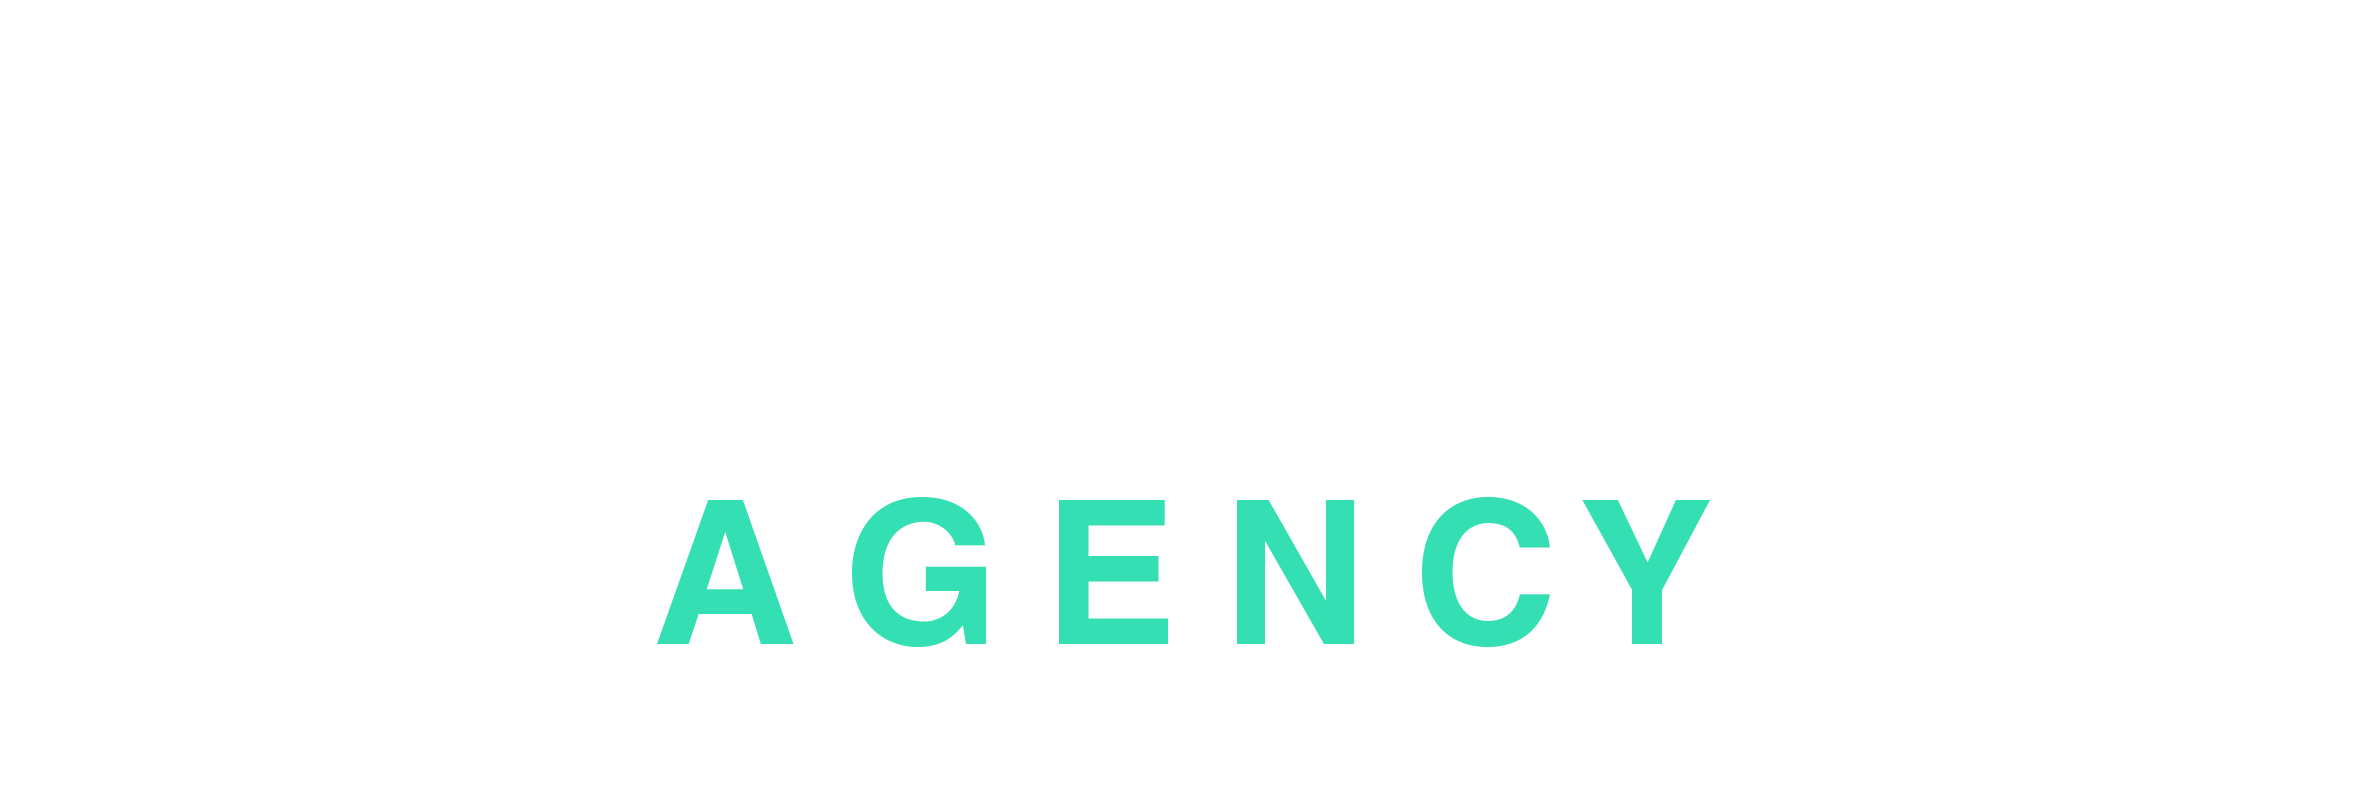 Performans Agency